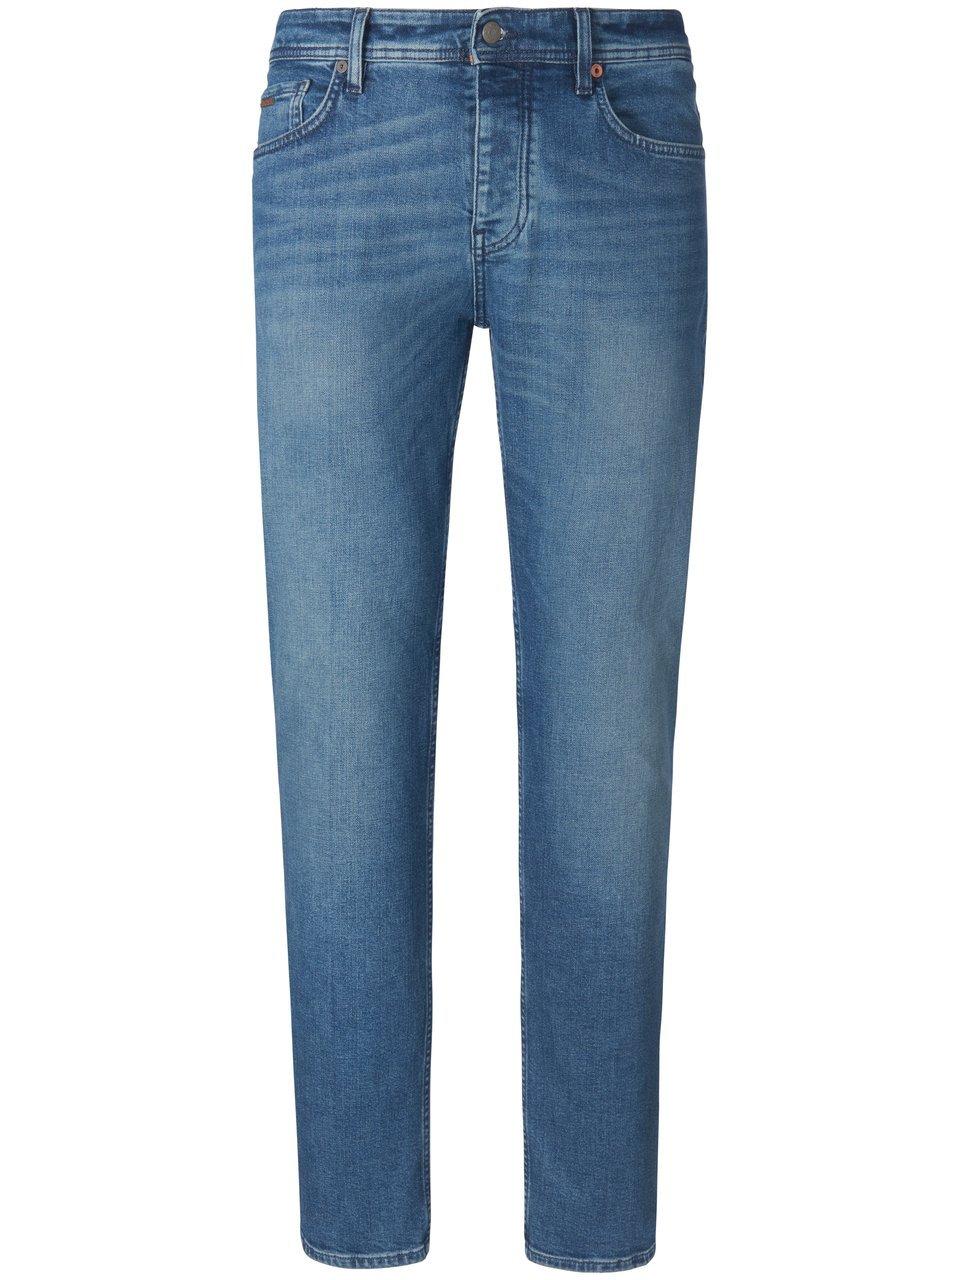 Jeans model Taber Van BOSS denim